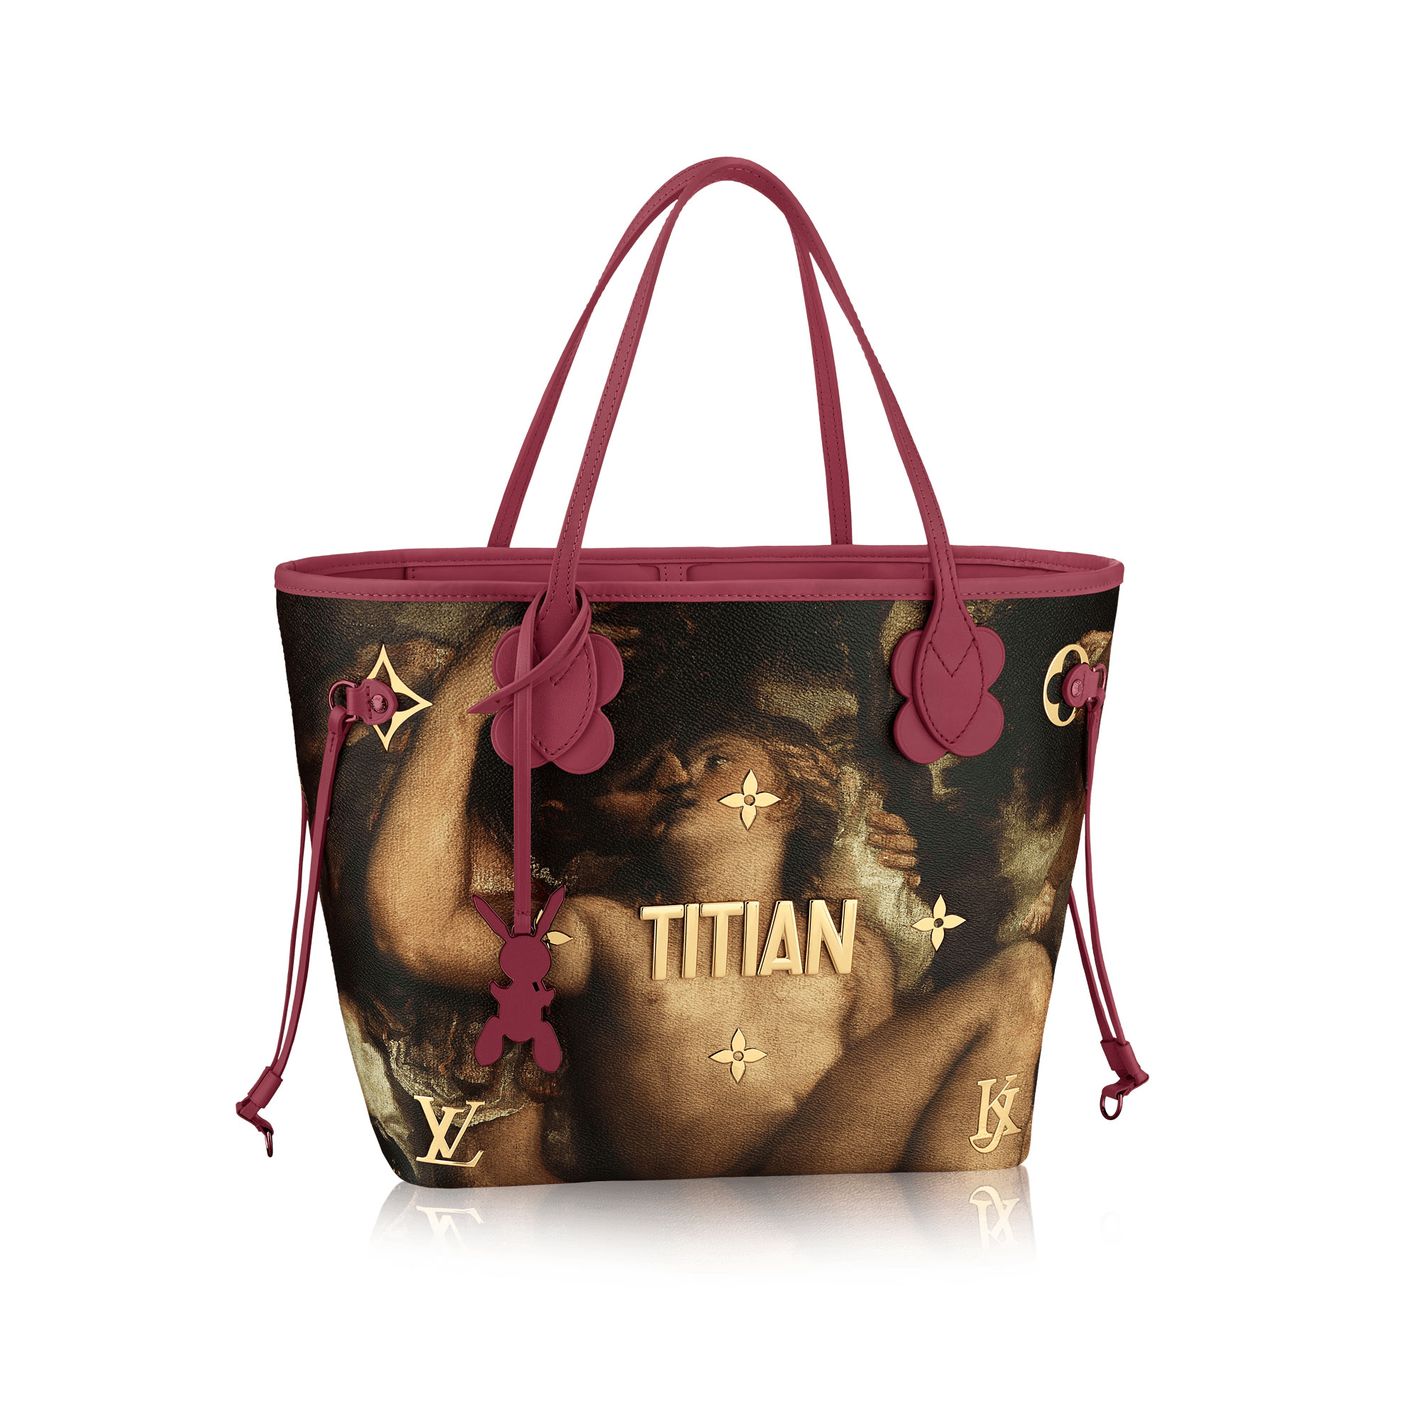 Louis Vuitton collaborates with Pop Artist Jeff Koons on Handbag Collection